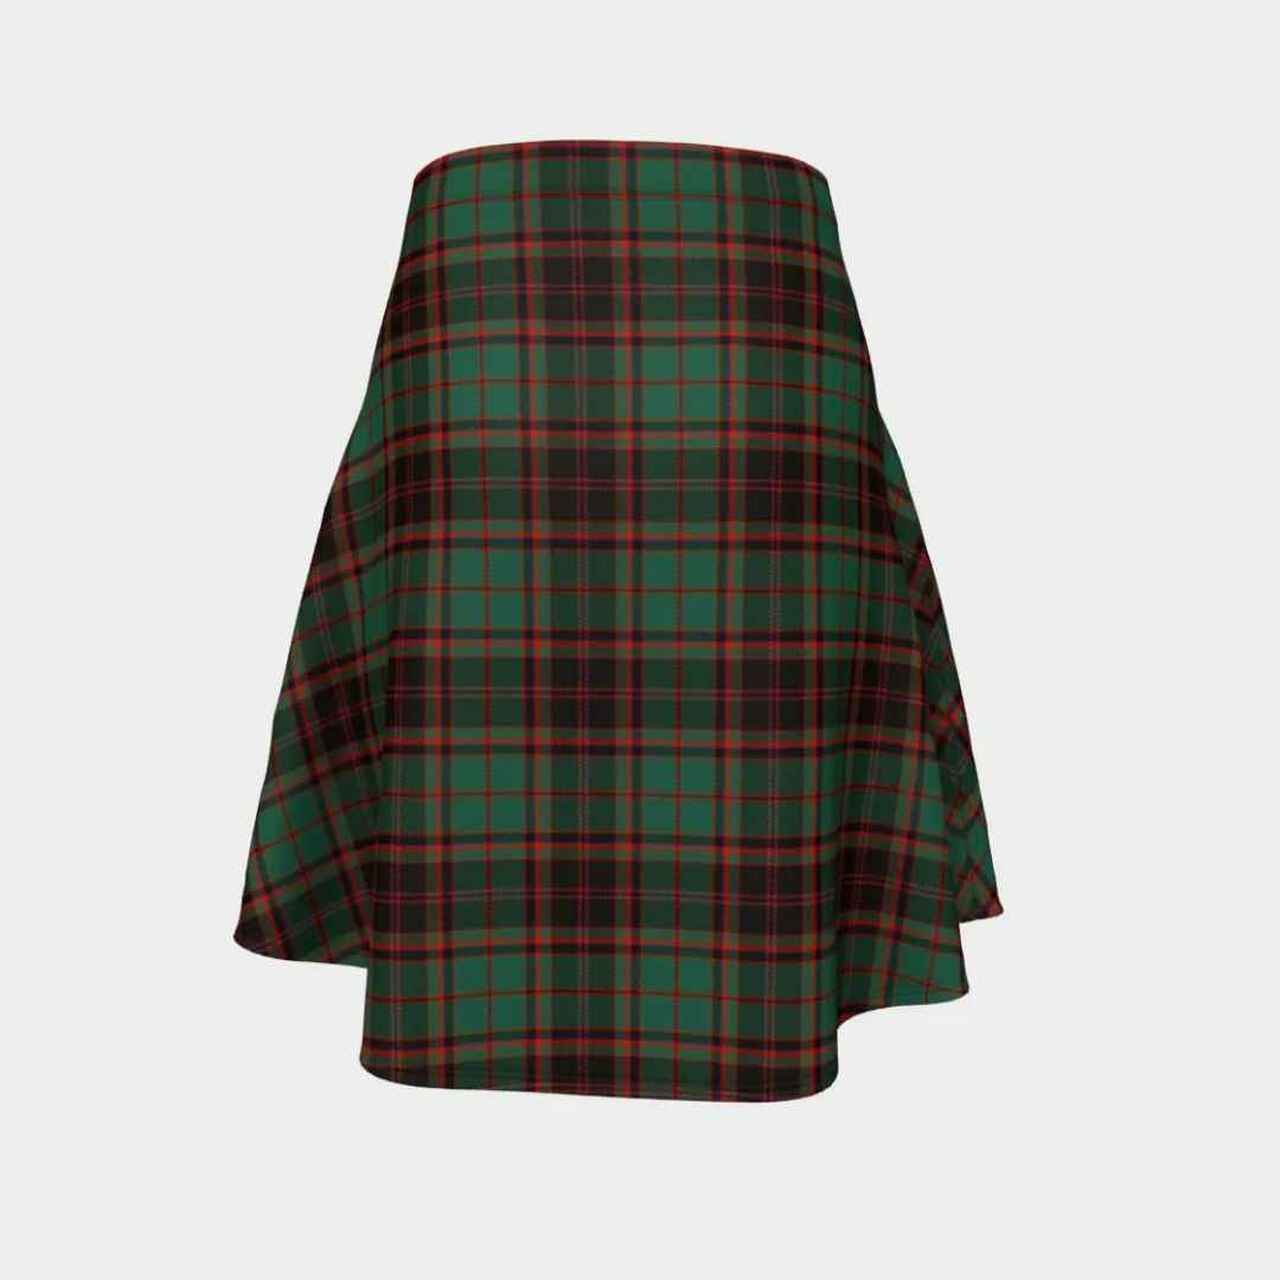 Buchan Ancient Tartan Flared Skirt